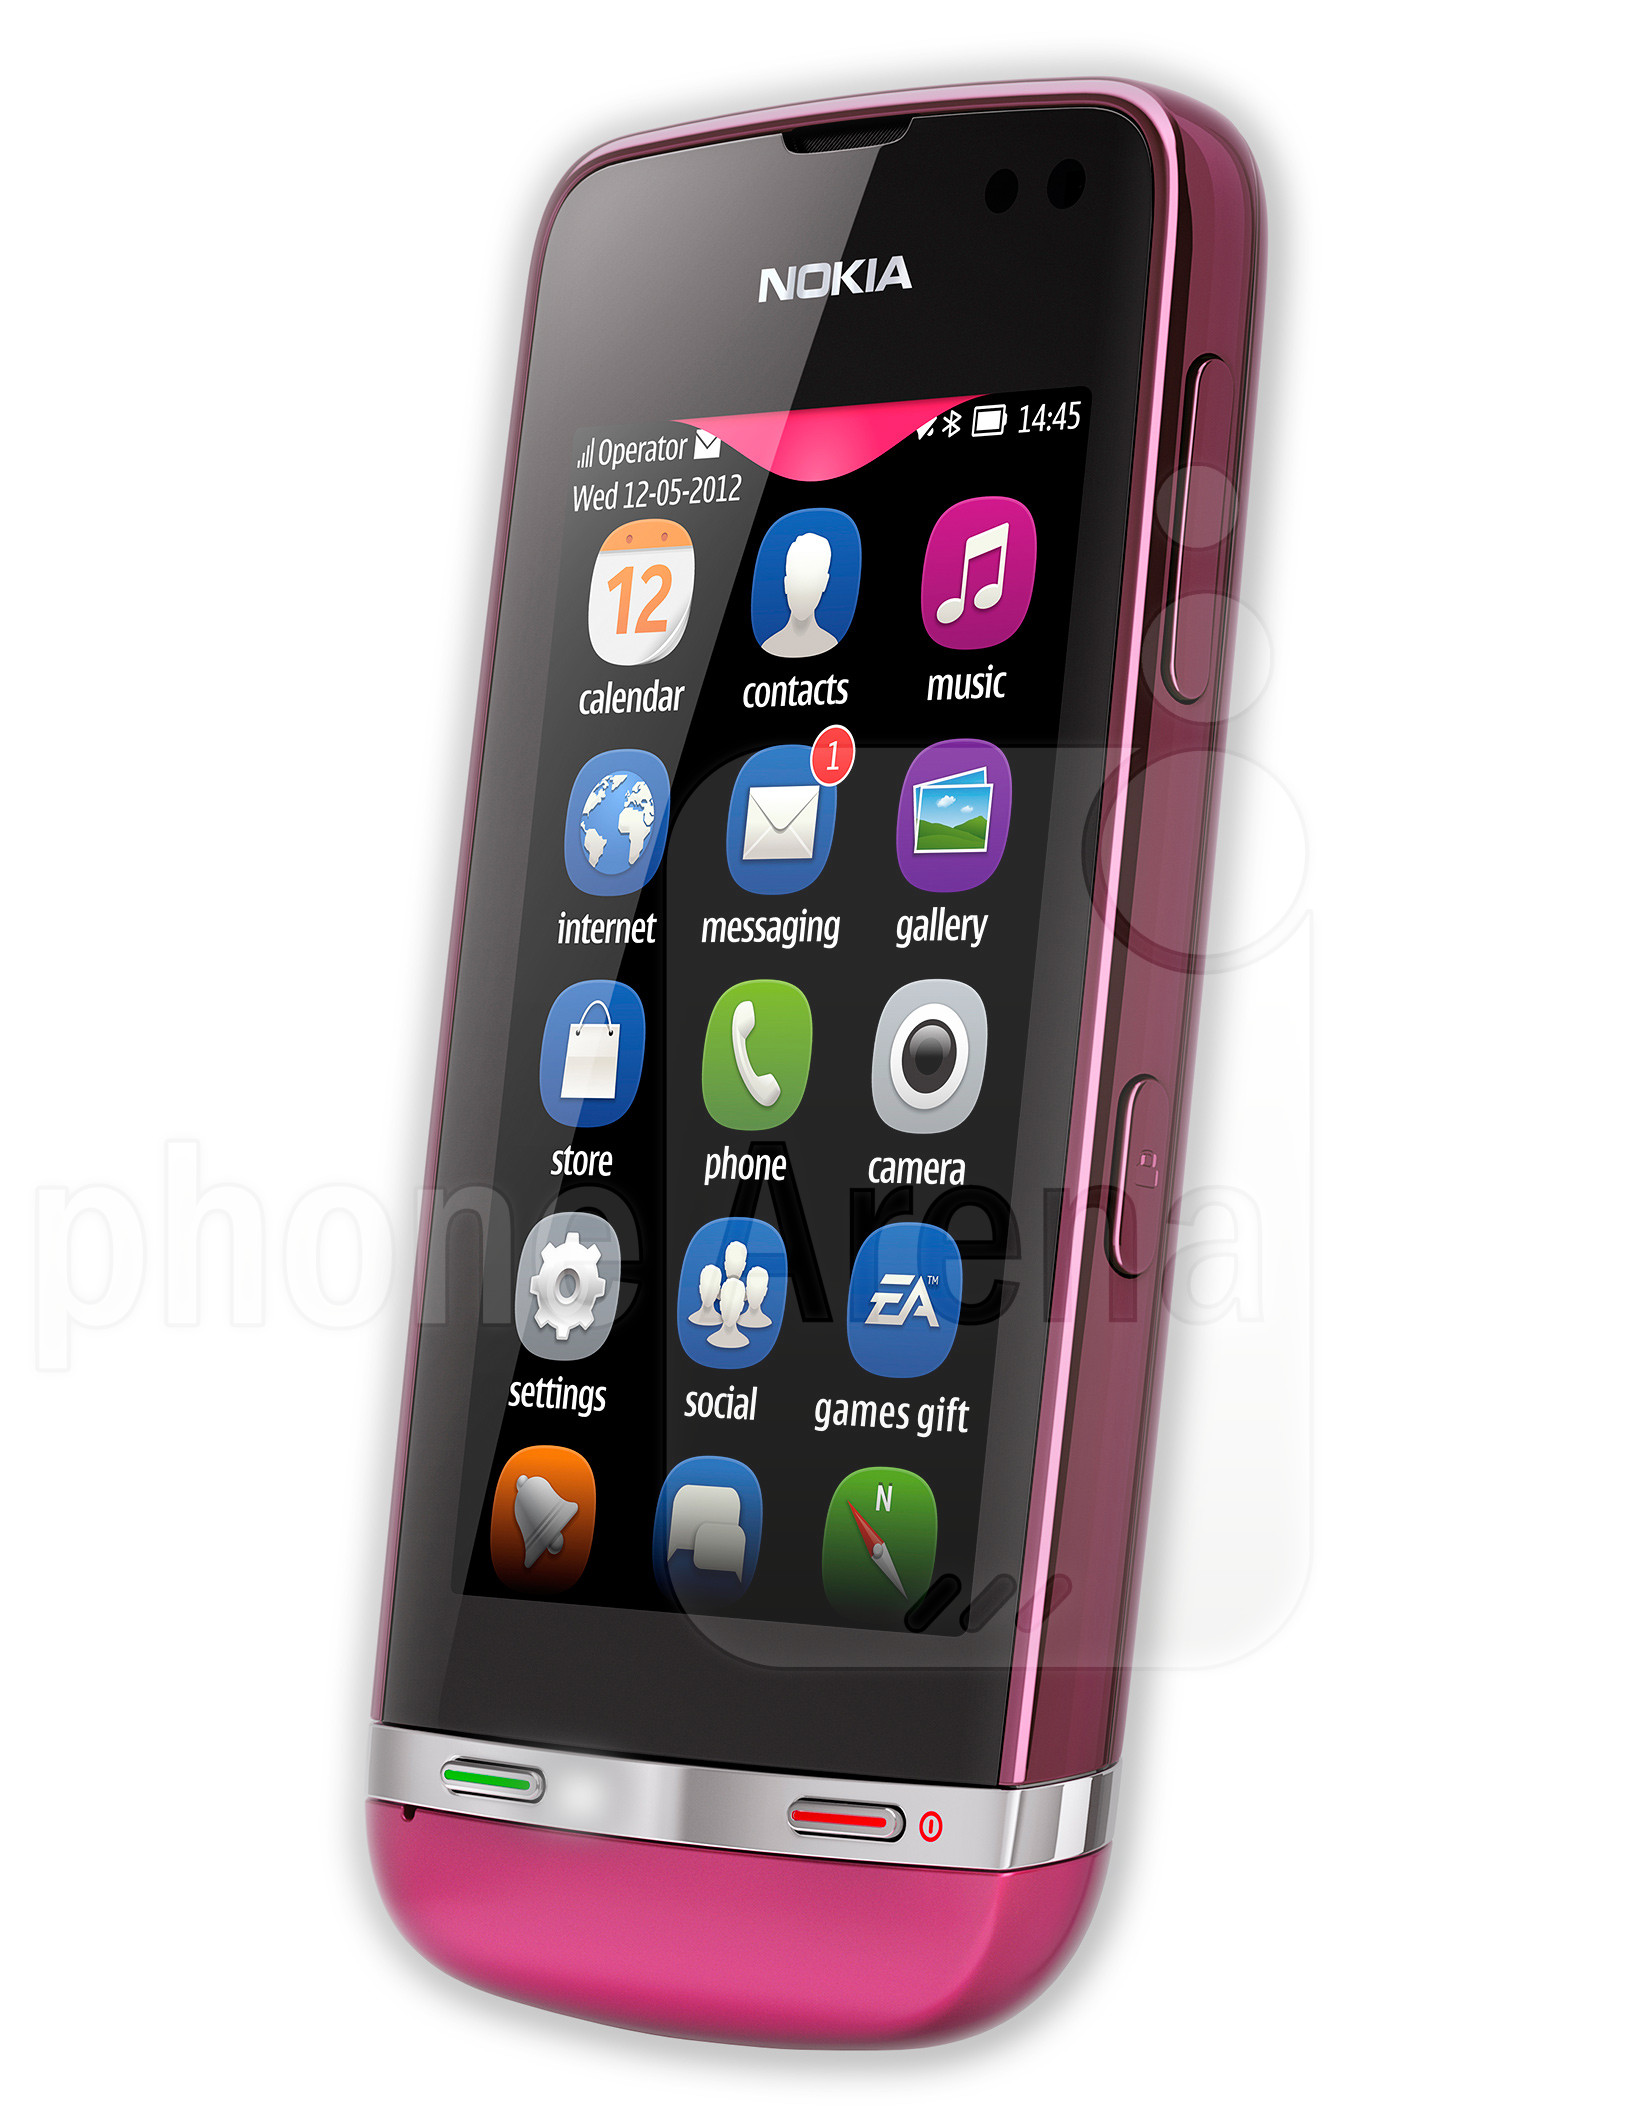 Nokia Asha 311 specs